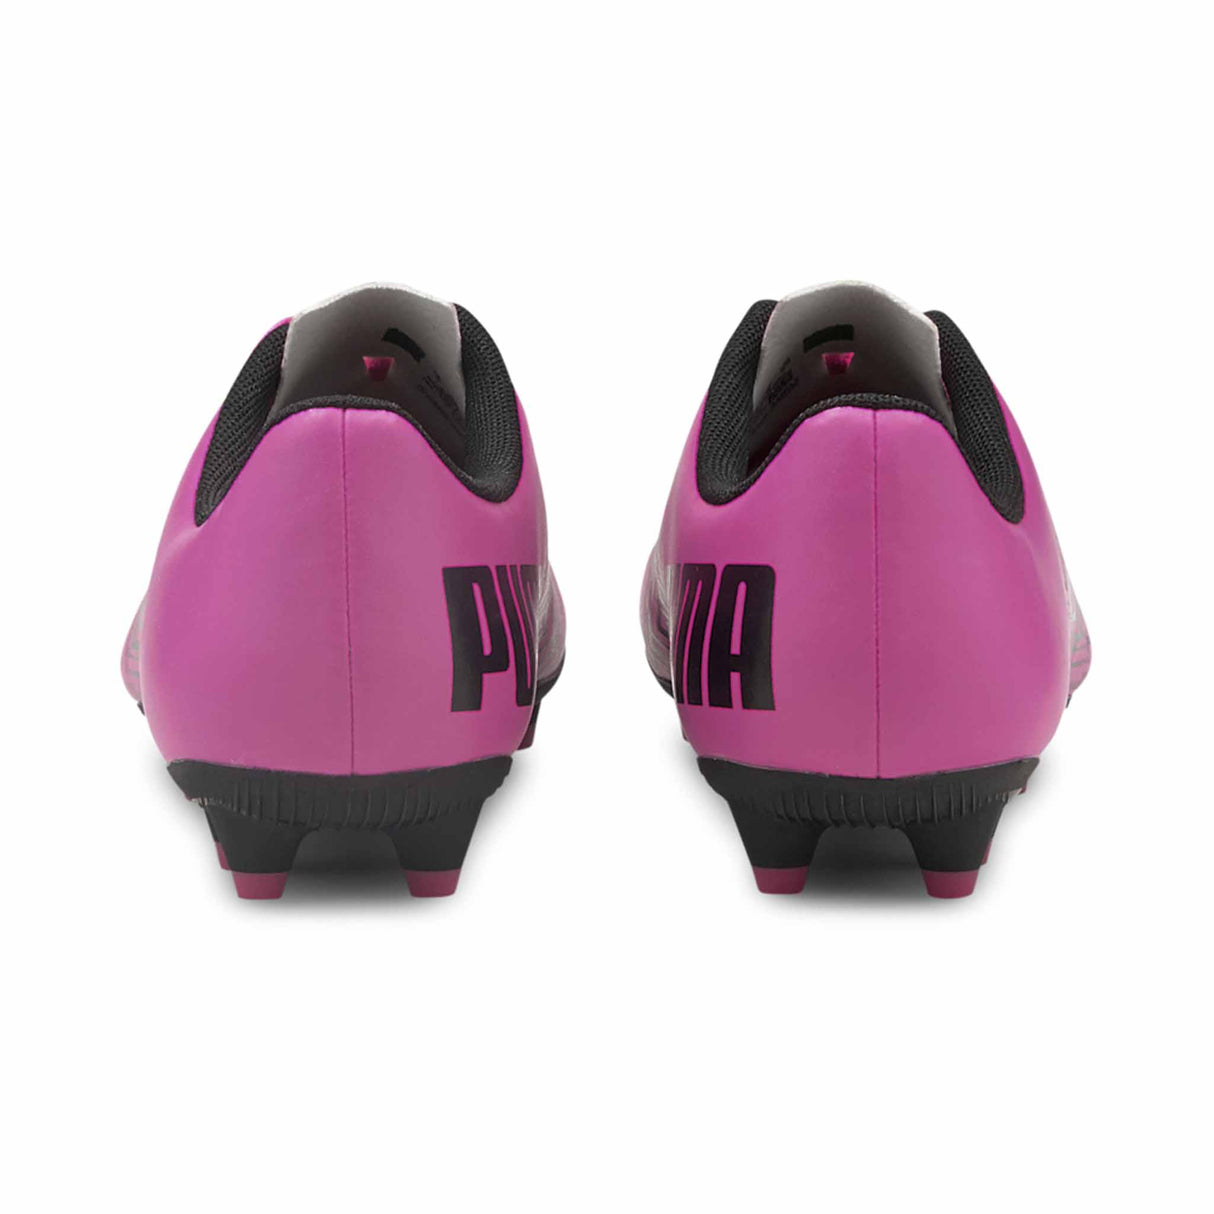 Puma Tacto FG/AG Junior chaussures de soccer enfant Rose / Noir vue de dos